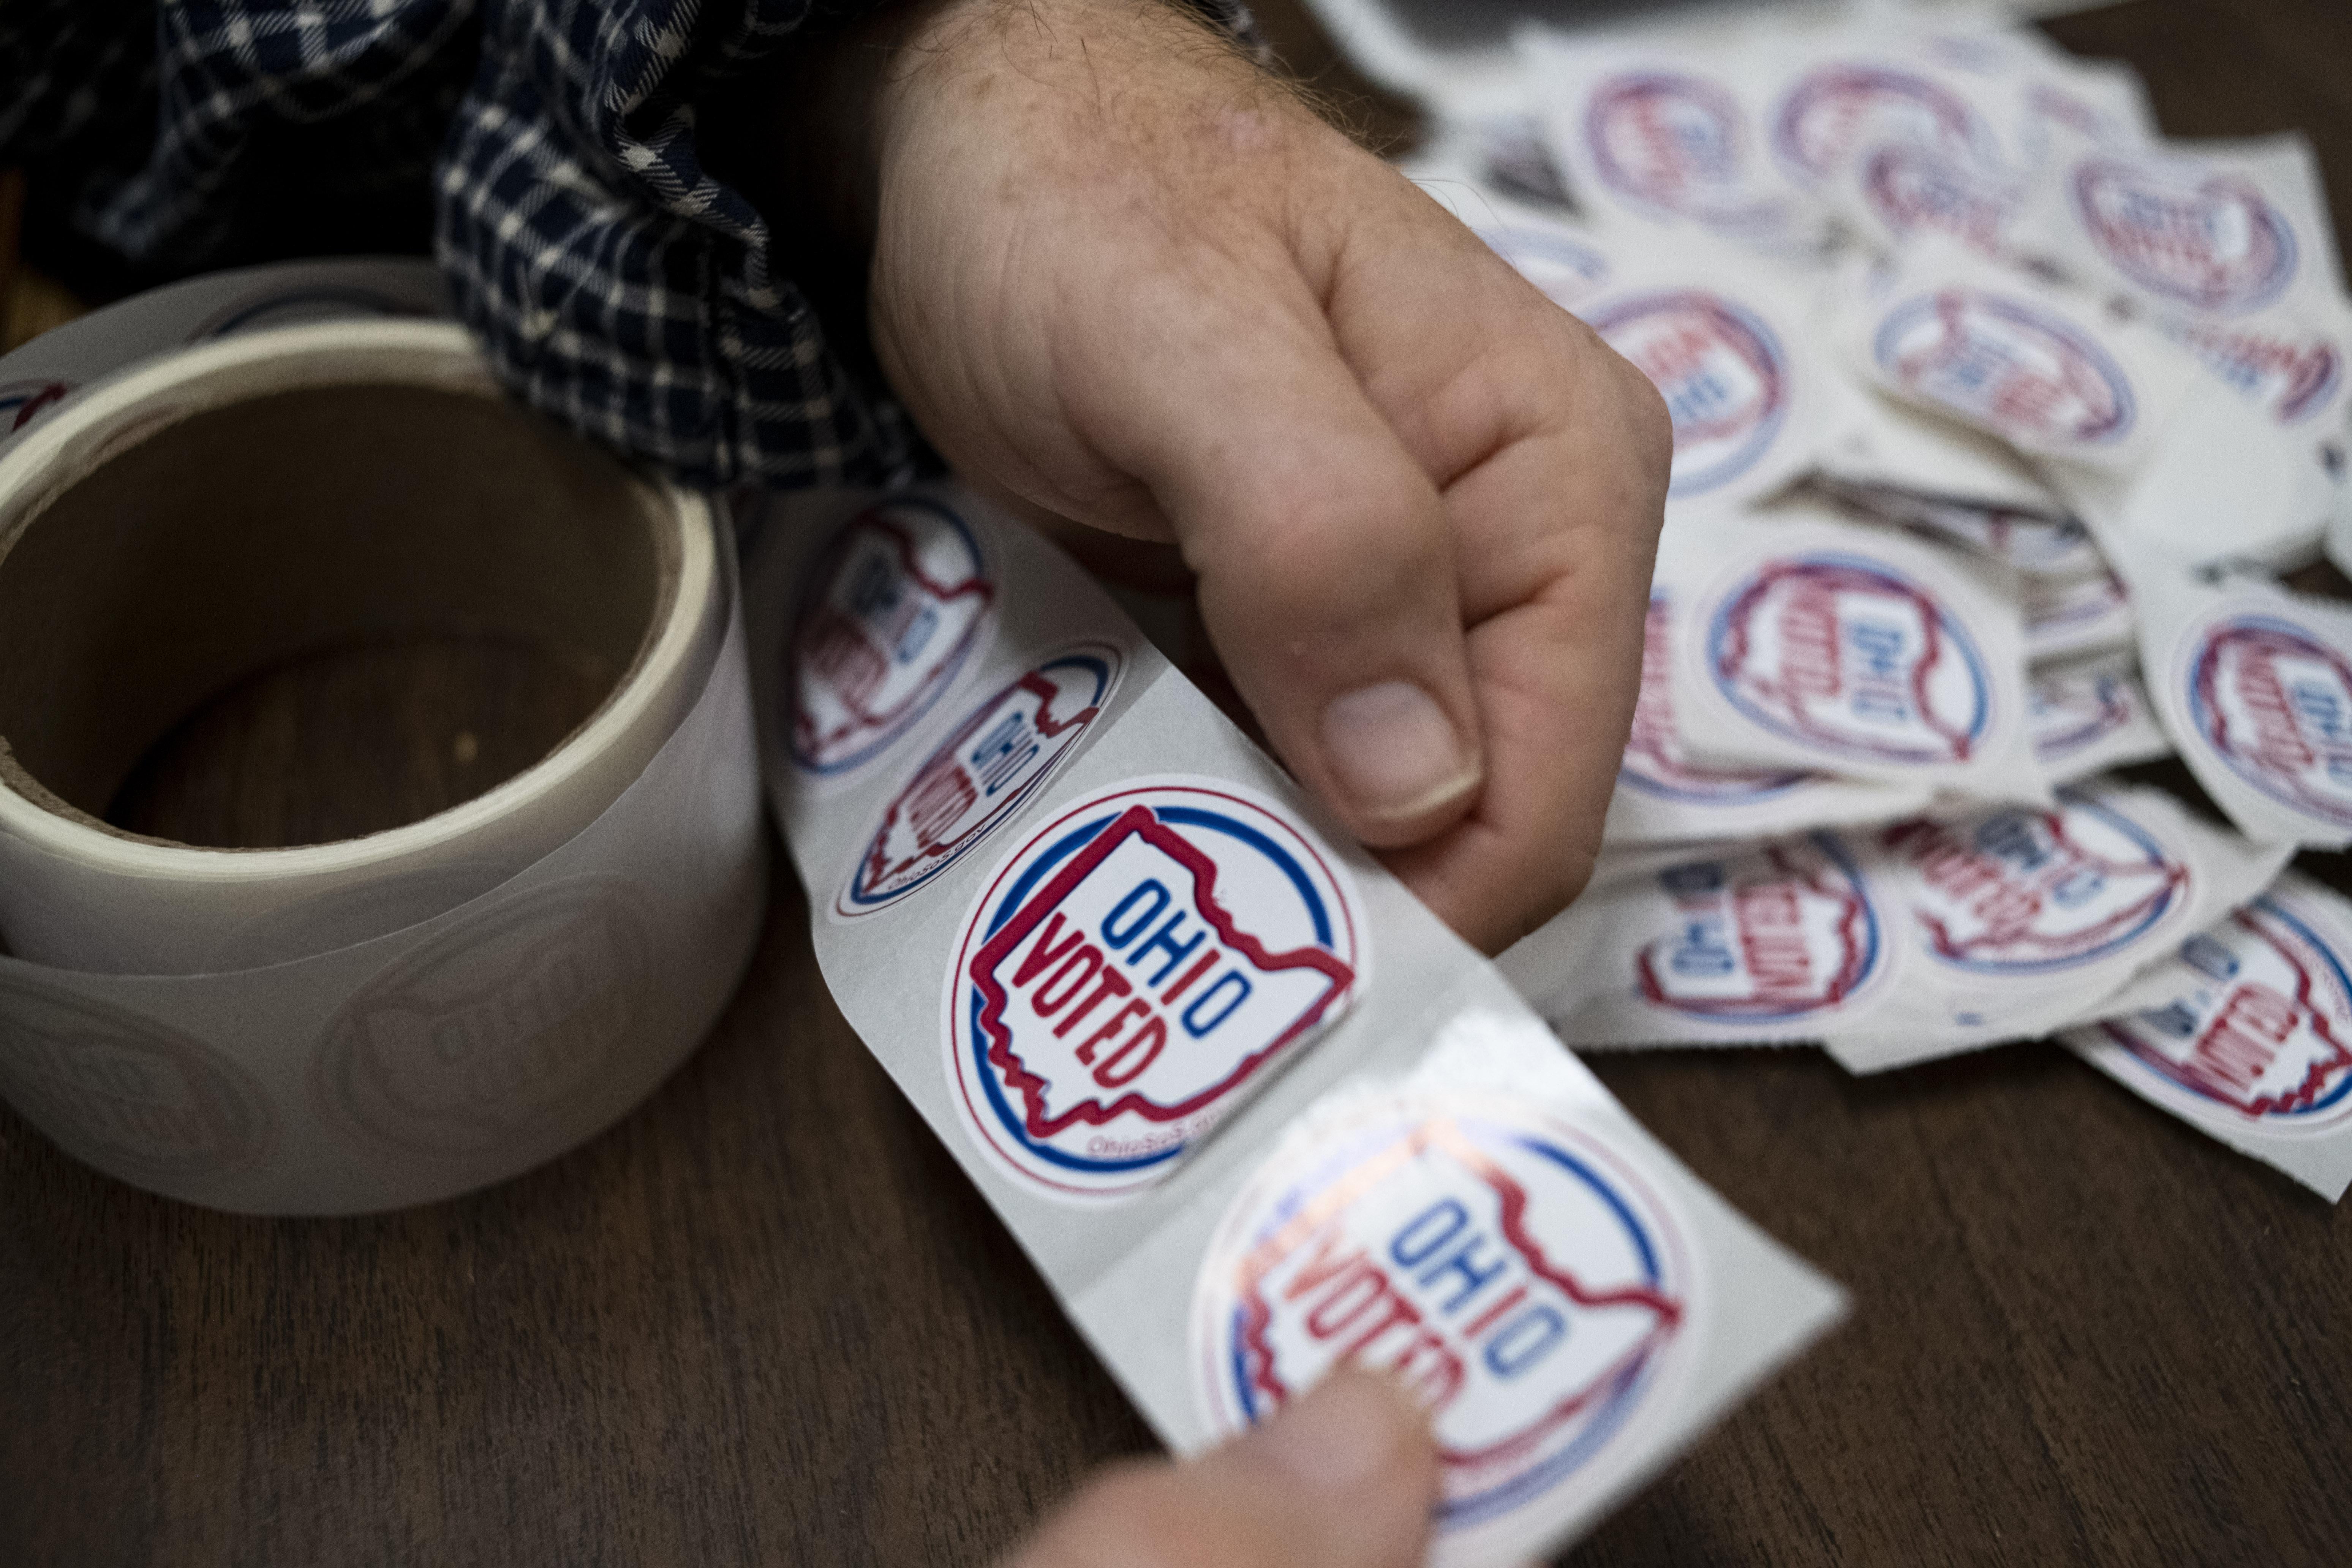 Ohio Votes “No” on Constitutional Change Now David Plotz, Emily Bazelon, and Juliette Kayyem